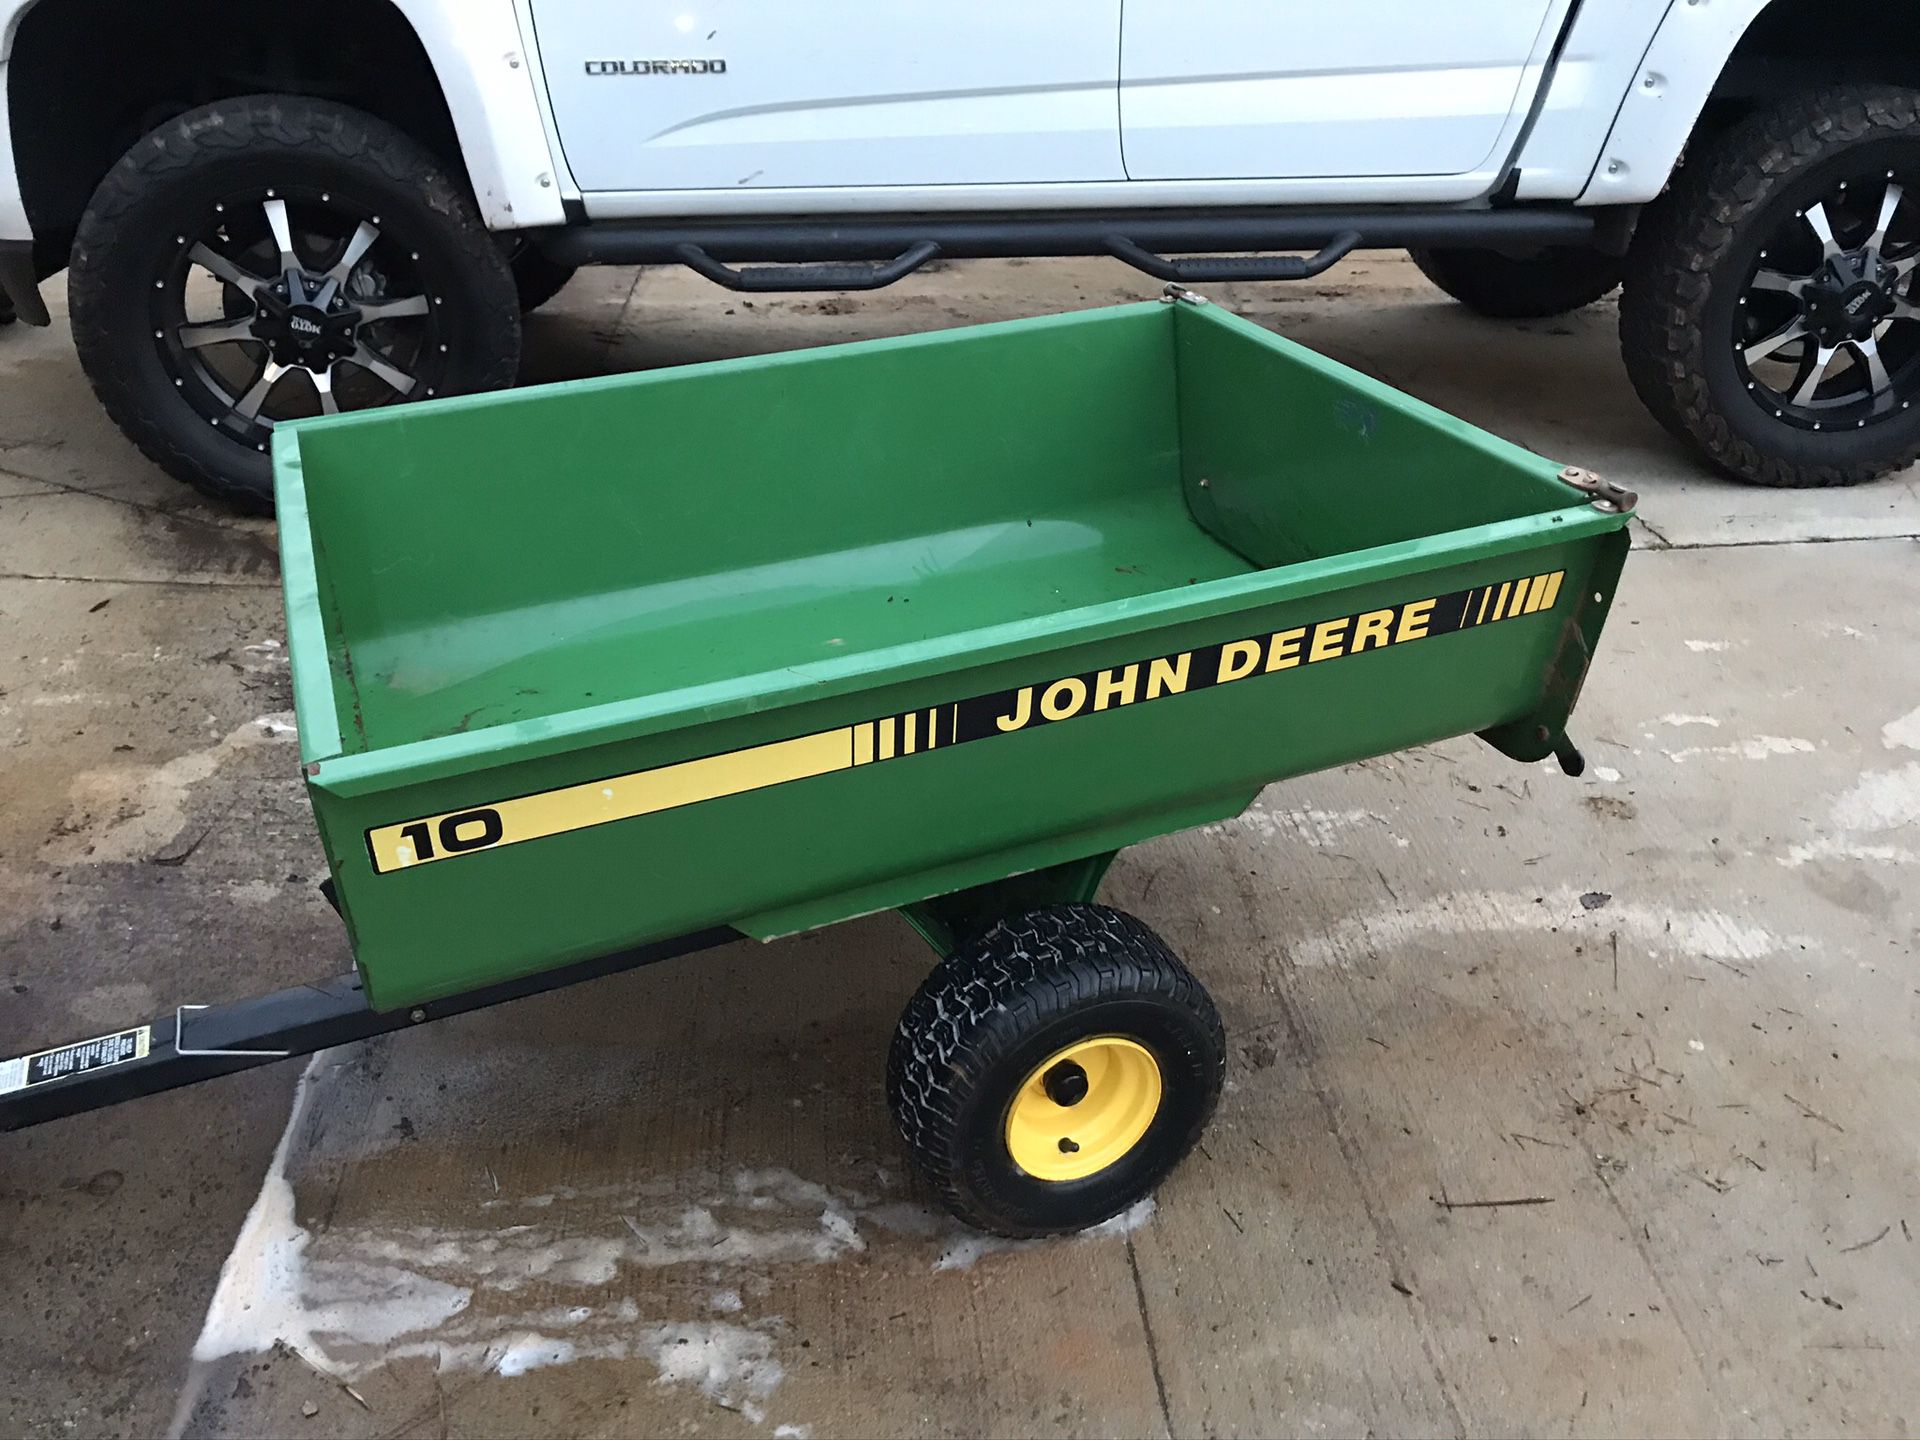 John Deere 10 cubic Foot dump cart / Trailer 1120 pound capacity!